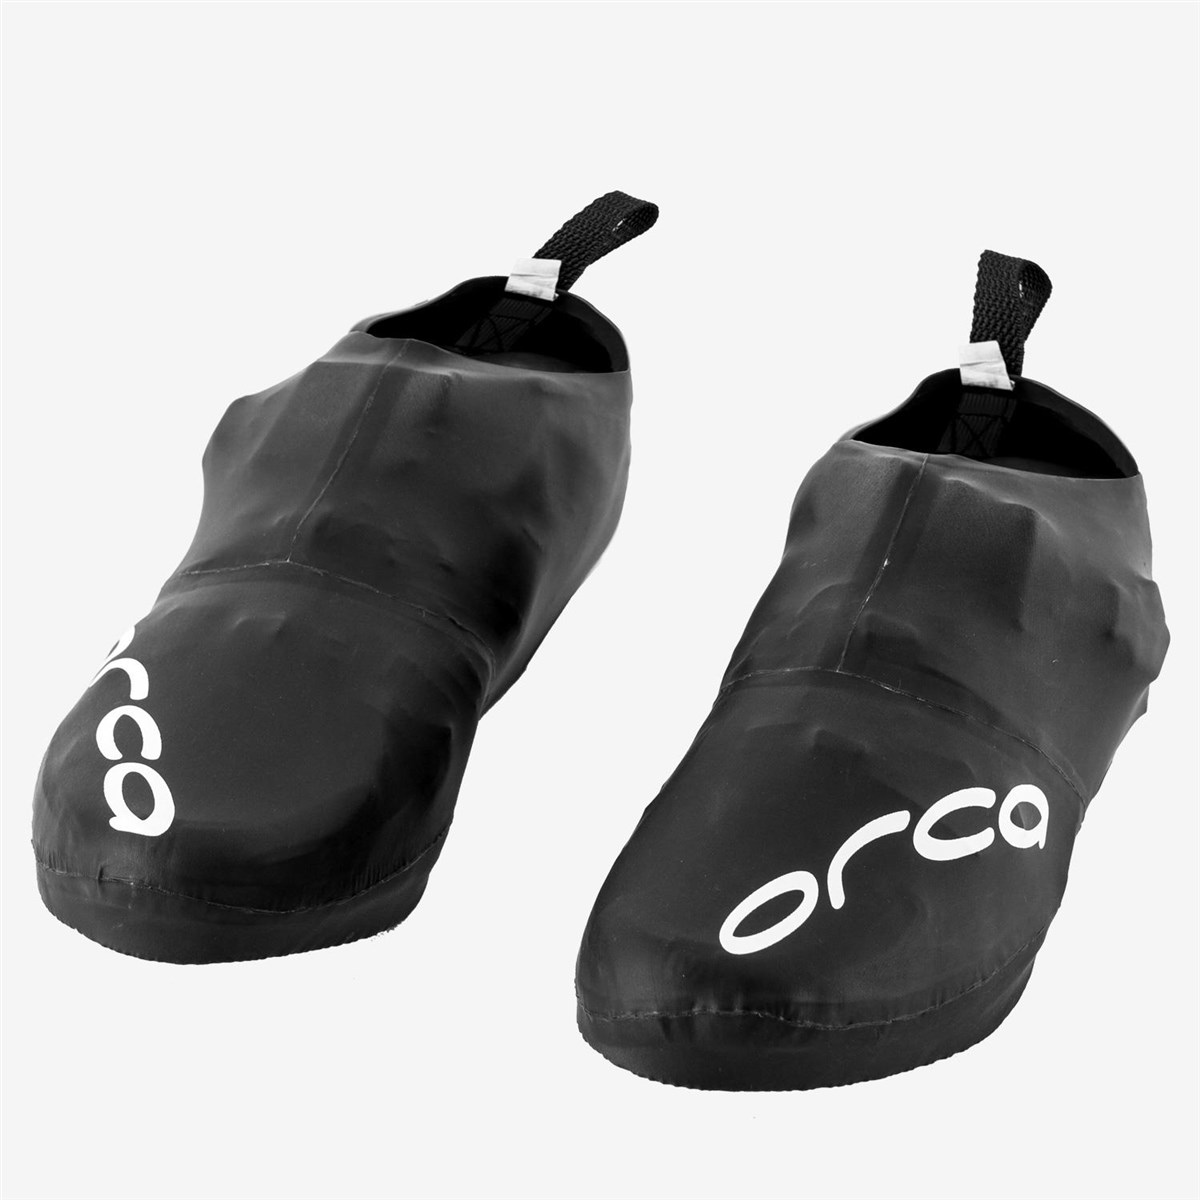 Orca Aero Shoe Covers product image